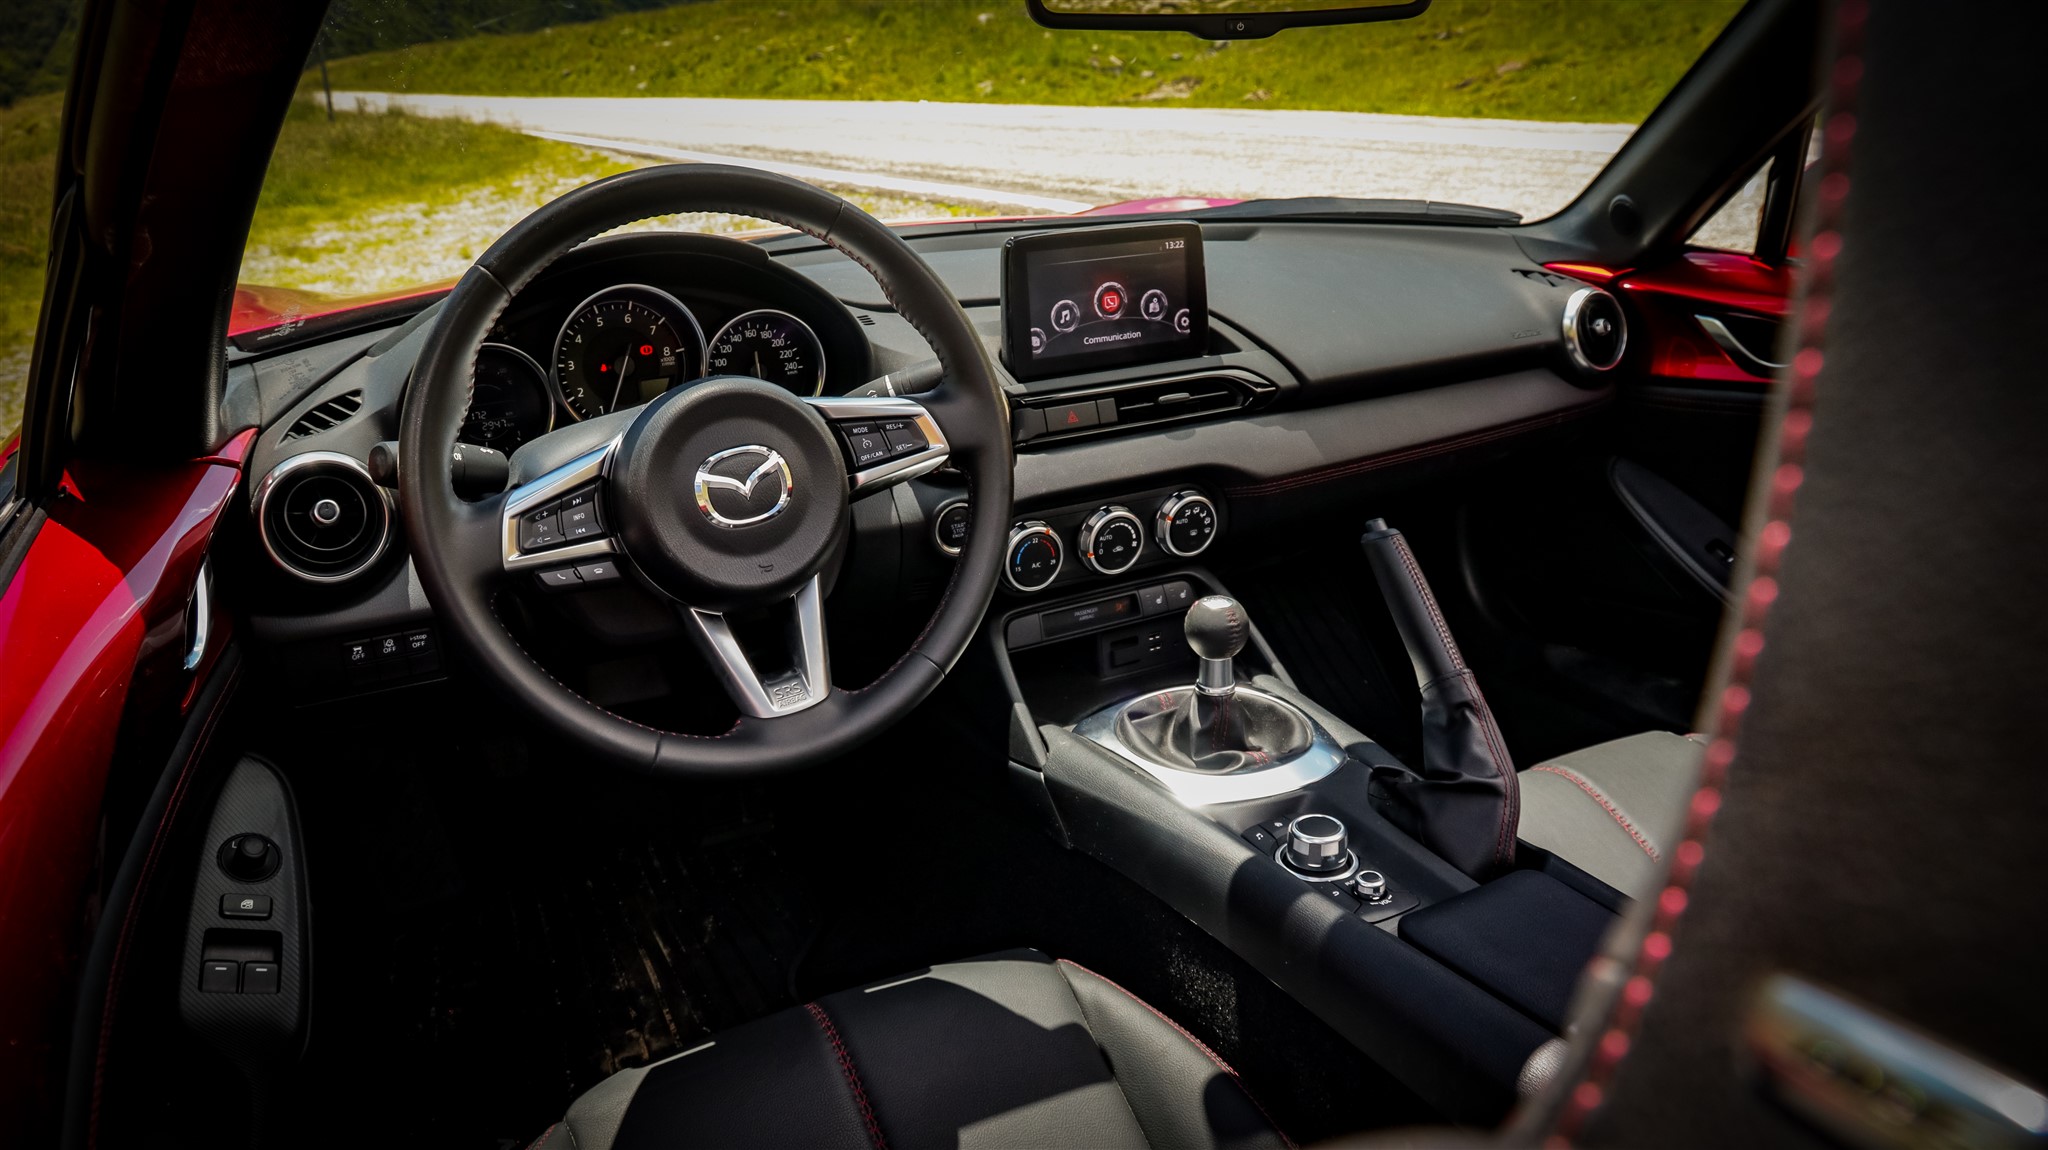 Mazda MX-5 2019 Skyactiv G184 M6 interior